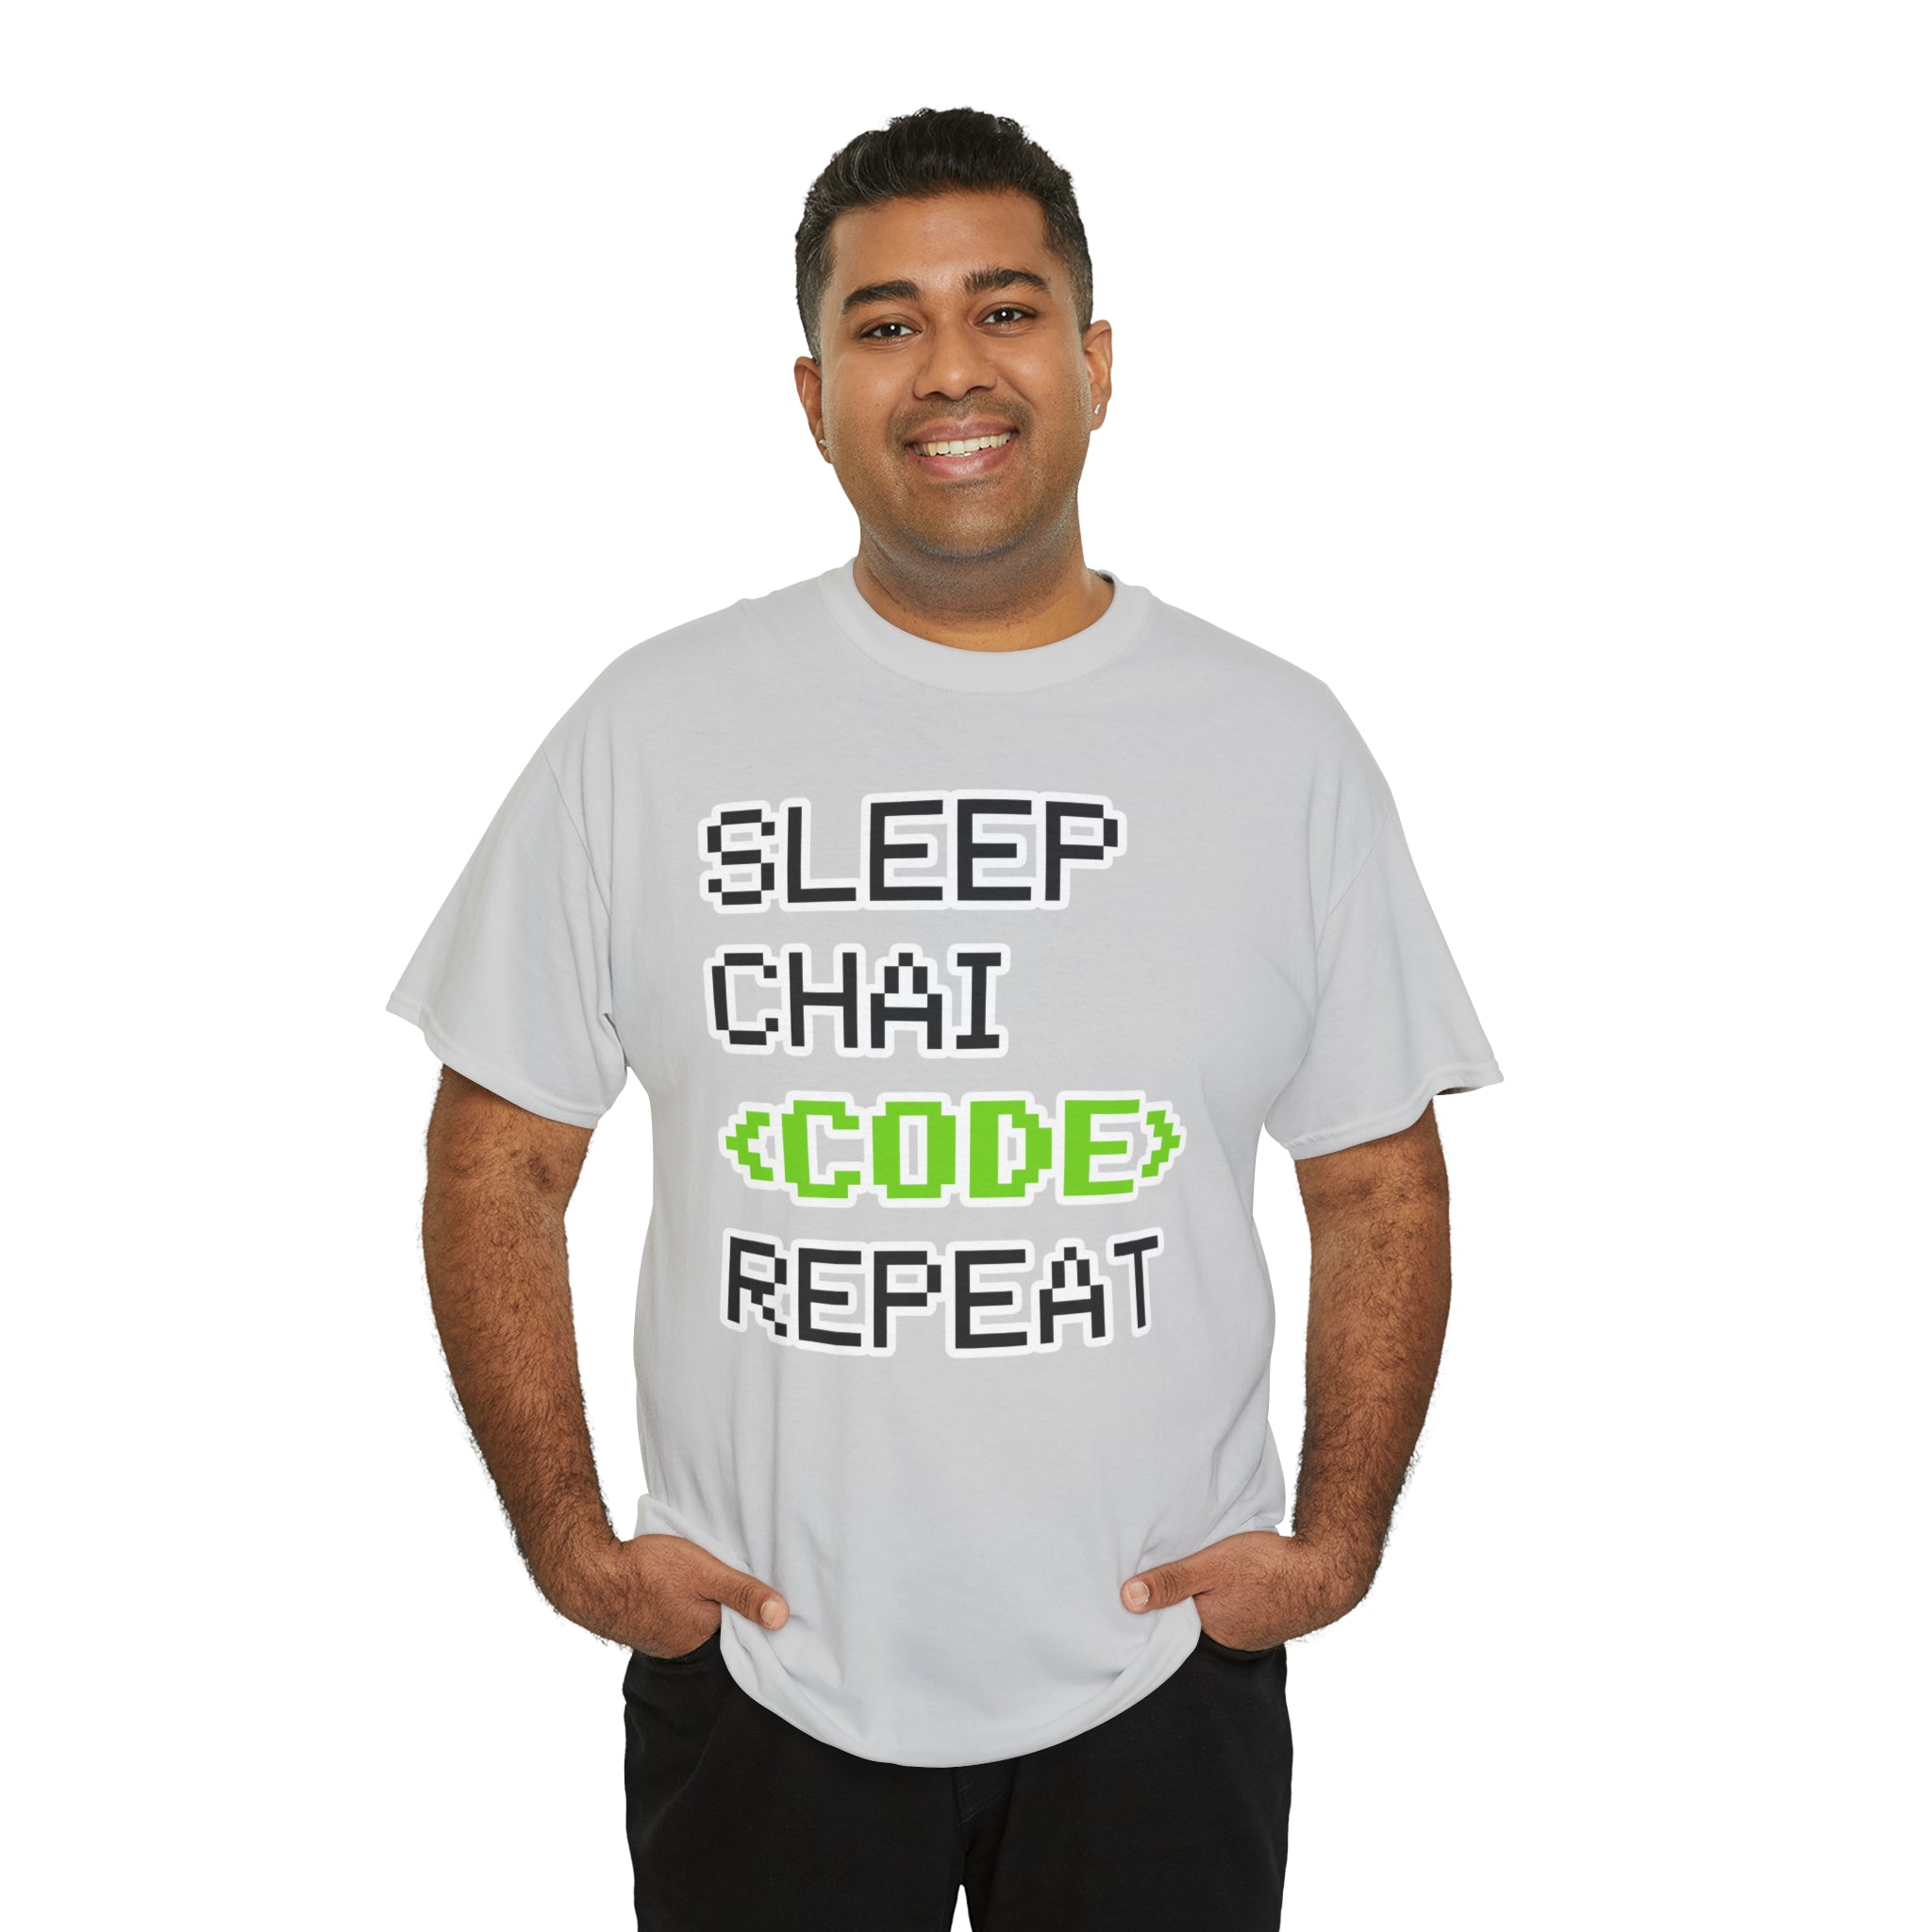 Sleep Chai Code Repeat T-Shirt Design by C&C